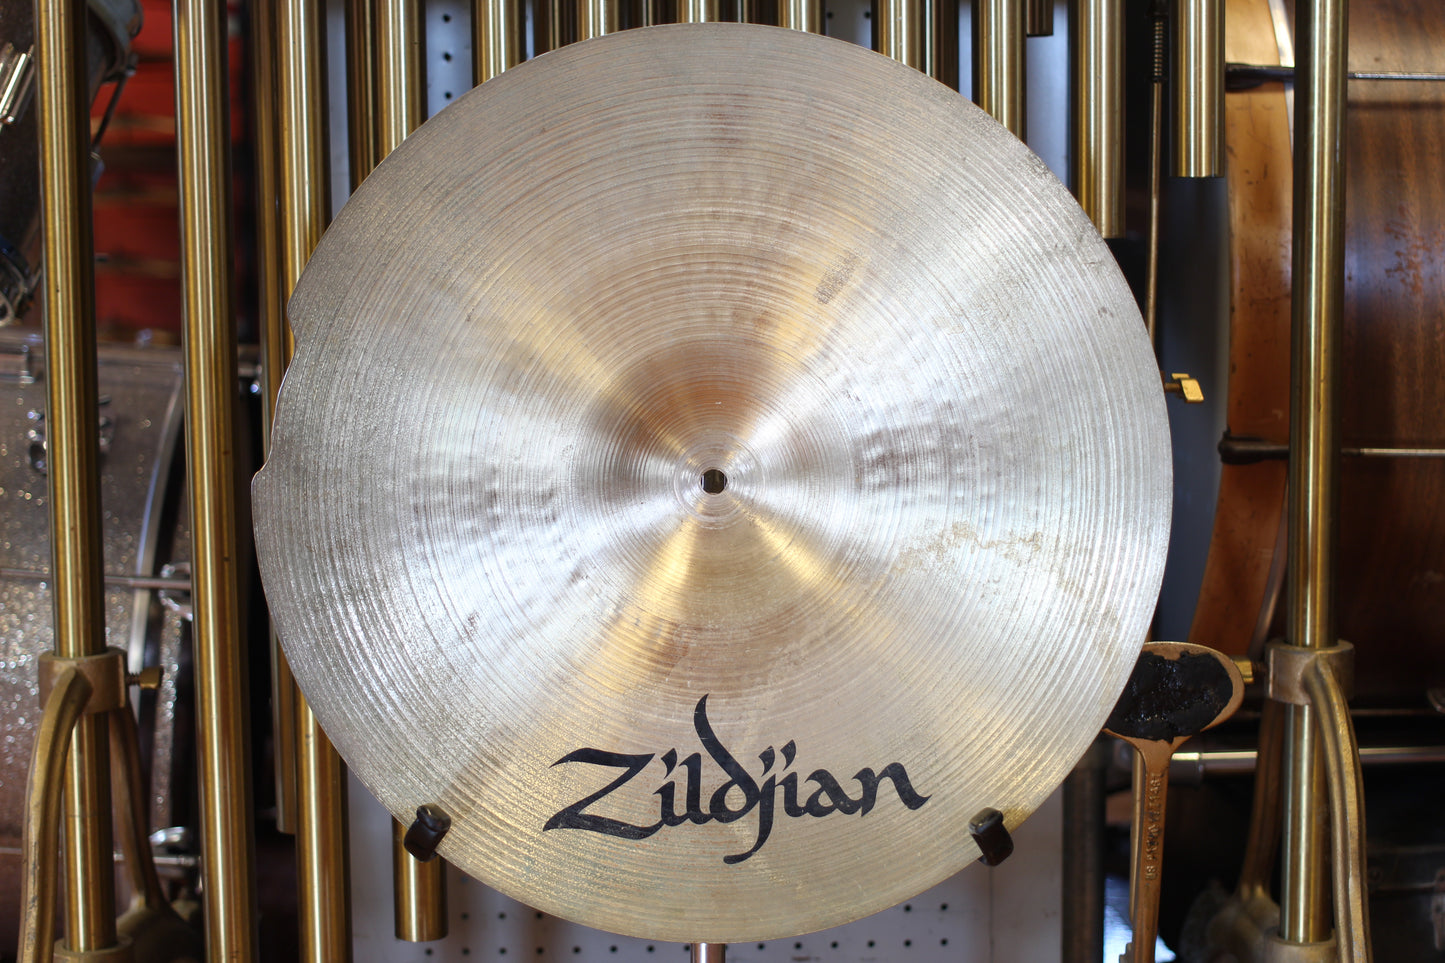 Used Zildjian 18" Medium Thin Crash Cymbal 1440g